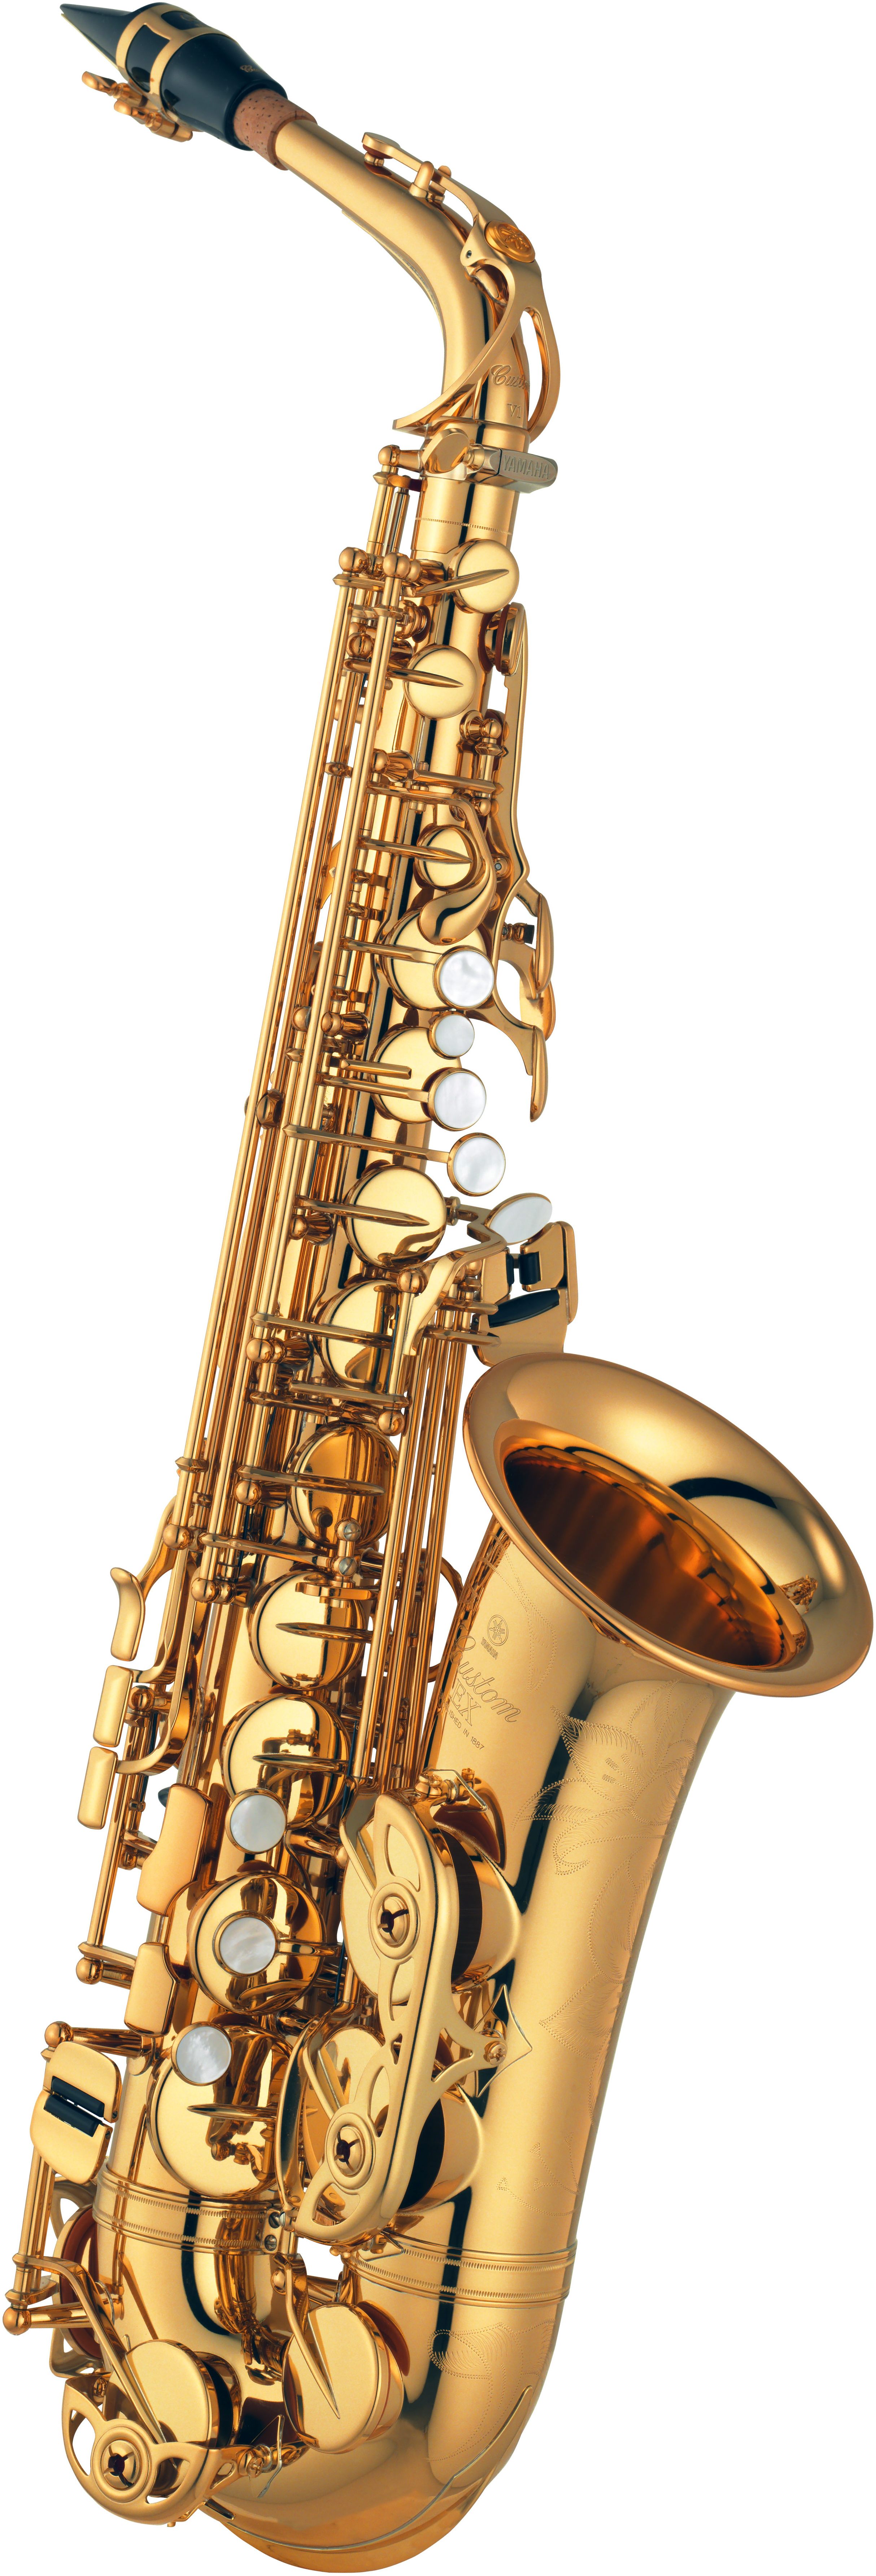 Yas 875ex Overview Saxophones Brass Woodwinds Musical